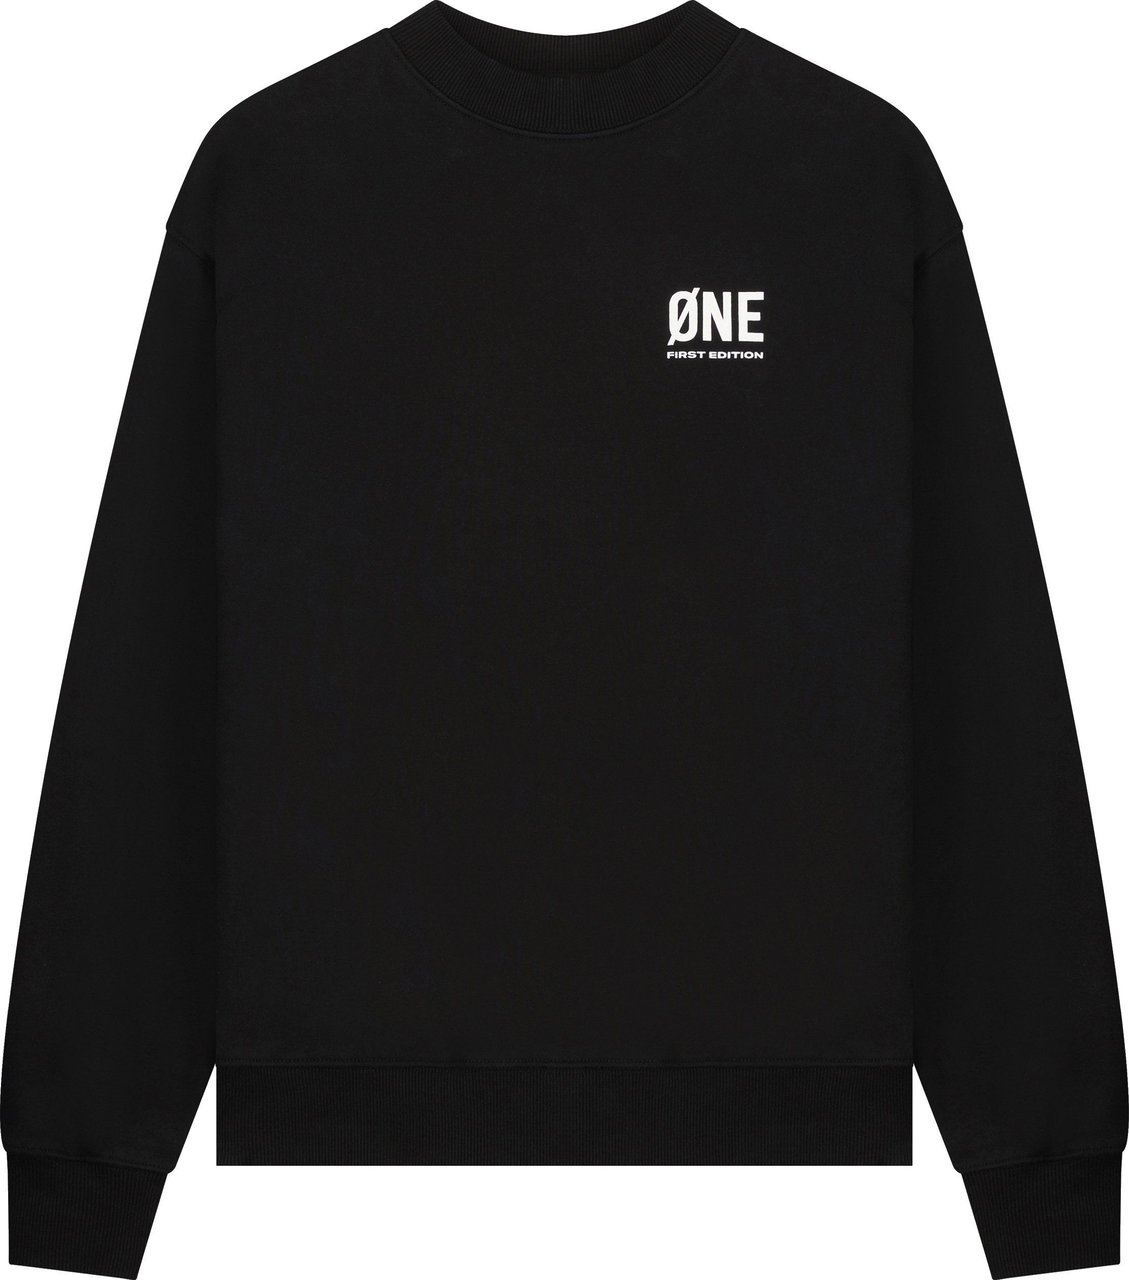 Øne First Movers Sweater Edition Øne Black Zwart